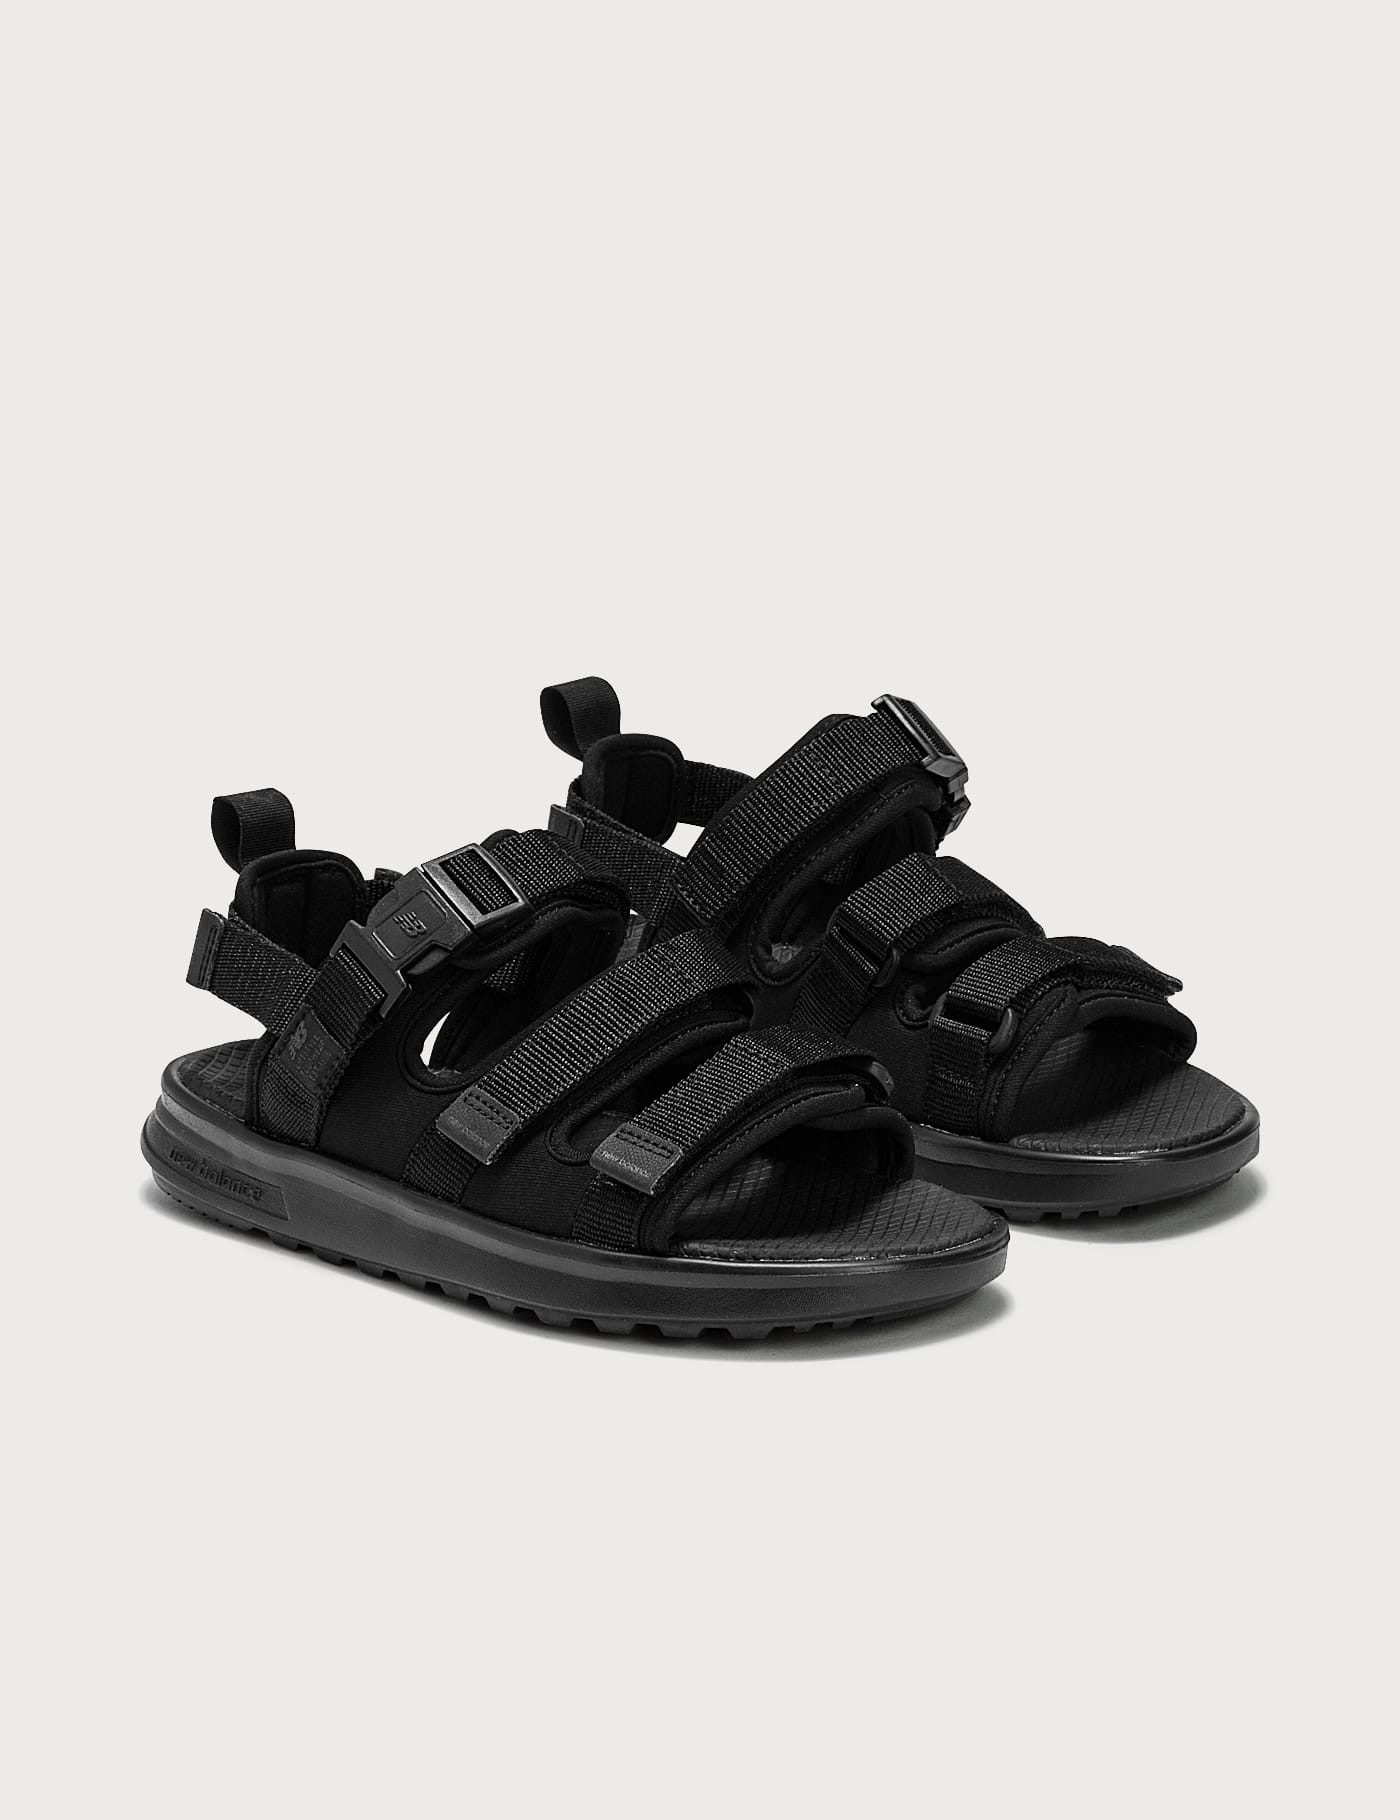 new balance 750 sandal, OFF 76%,Buy!